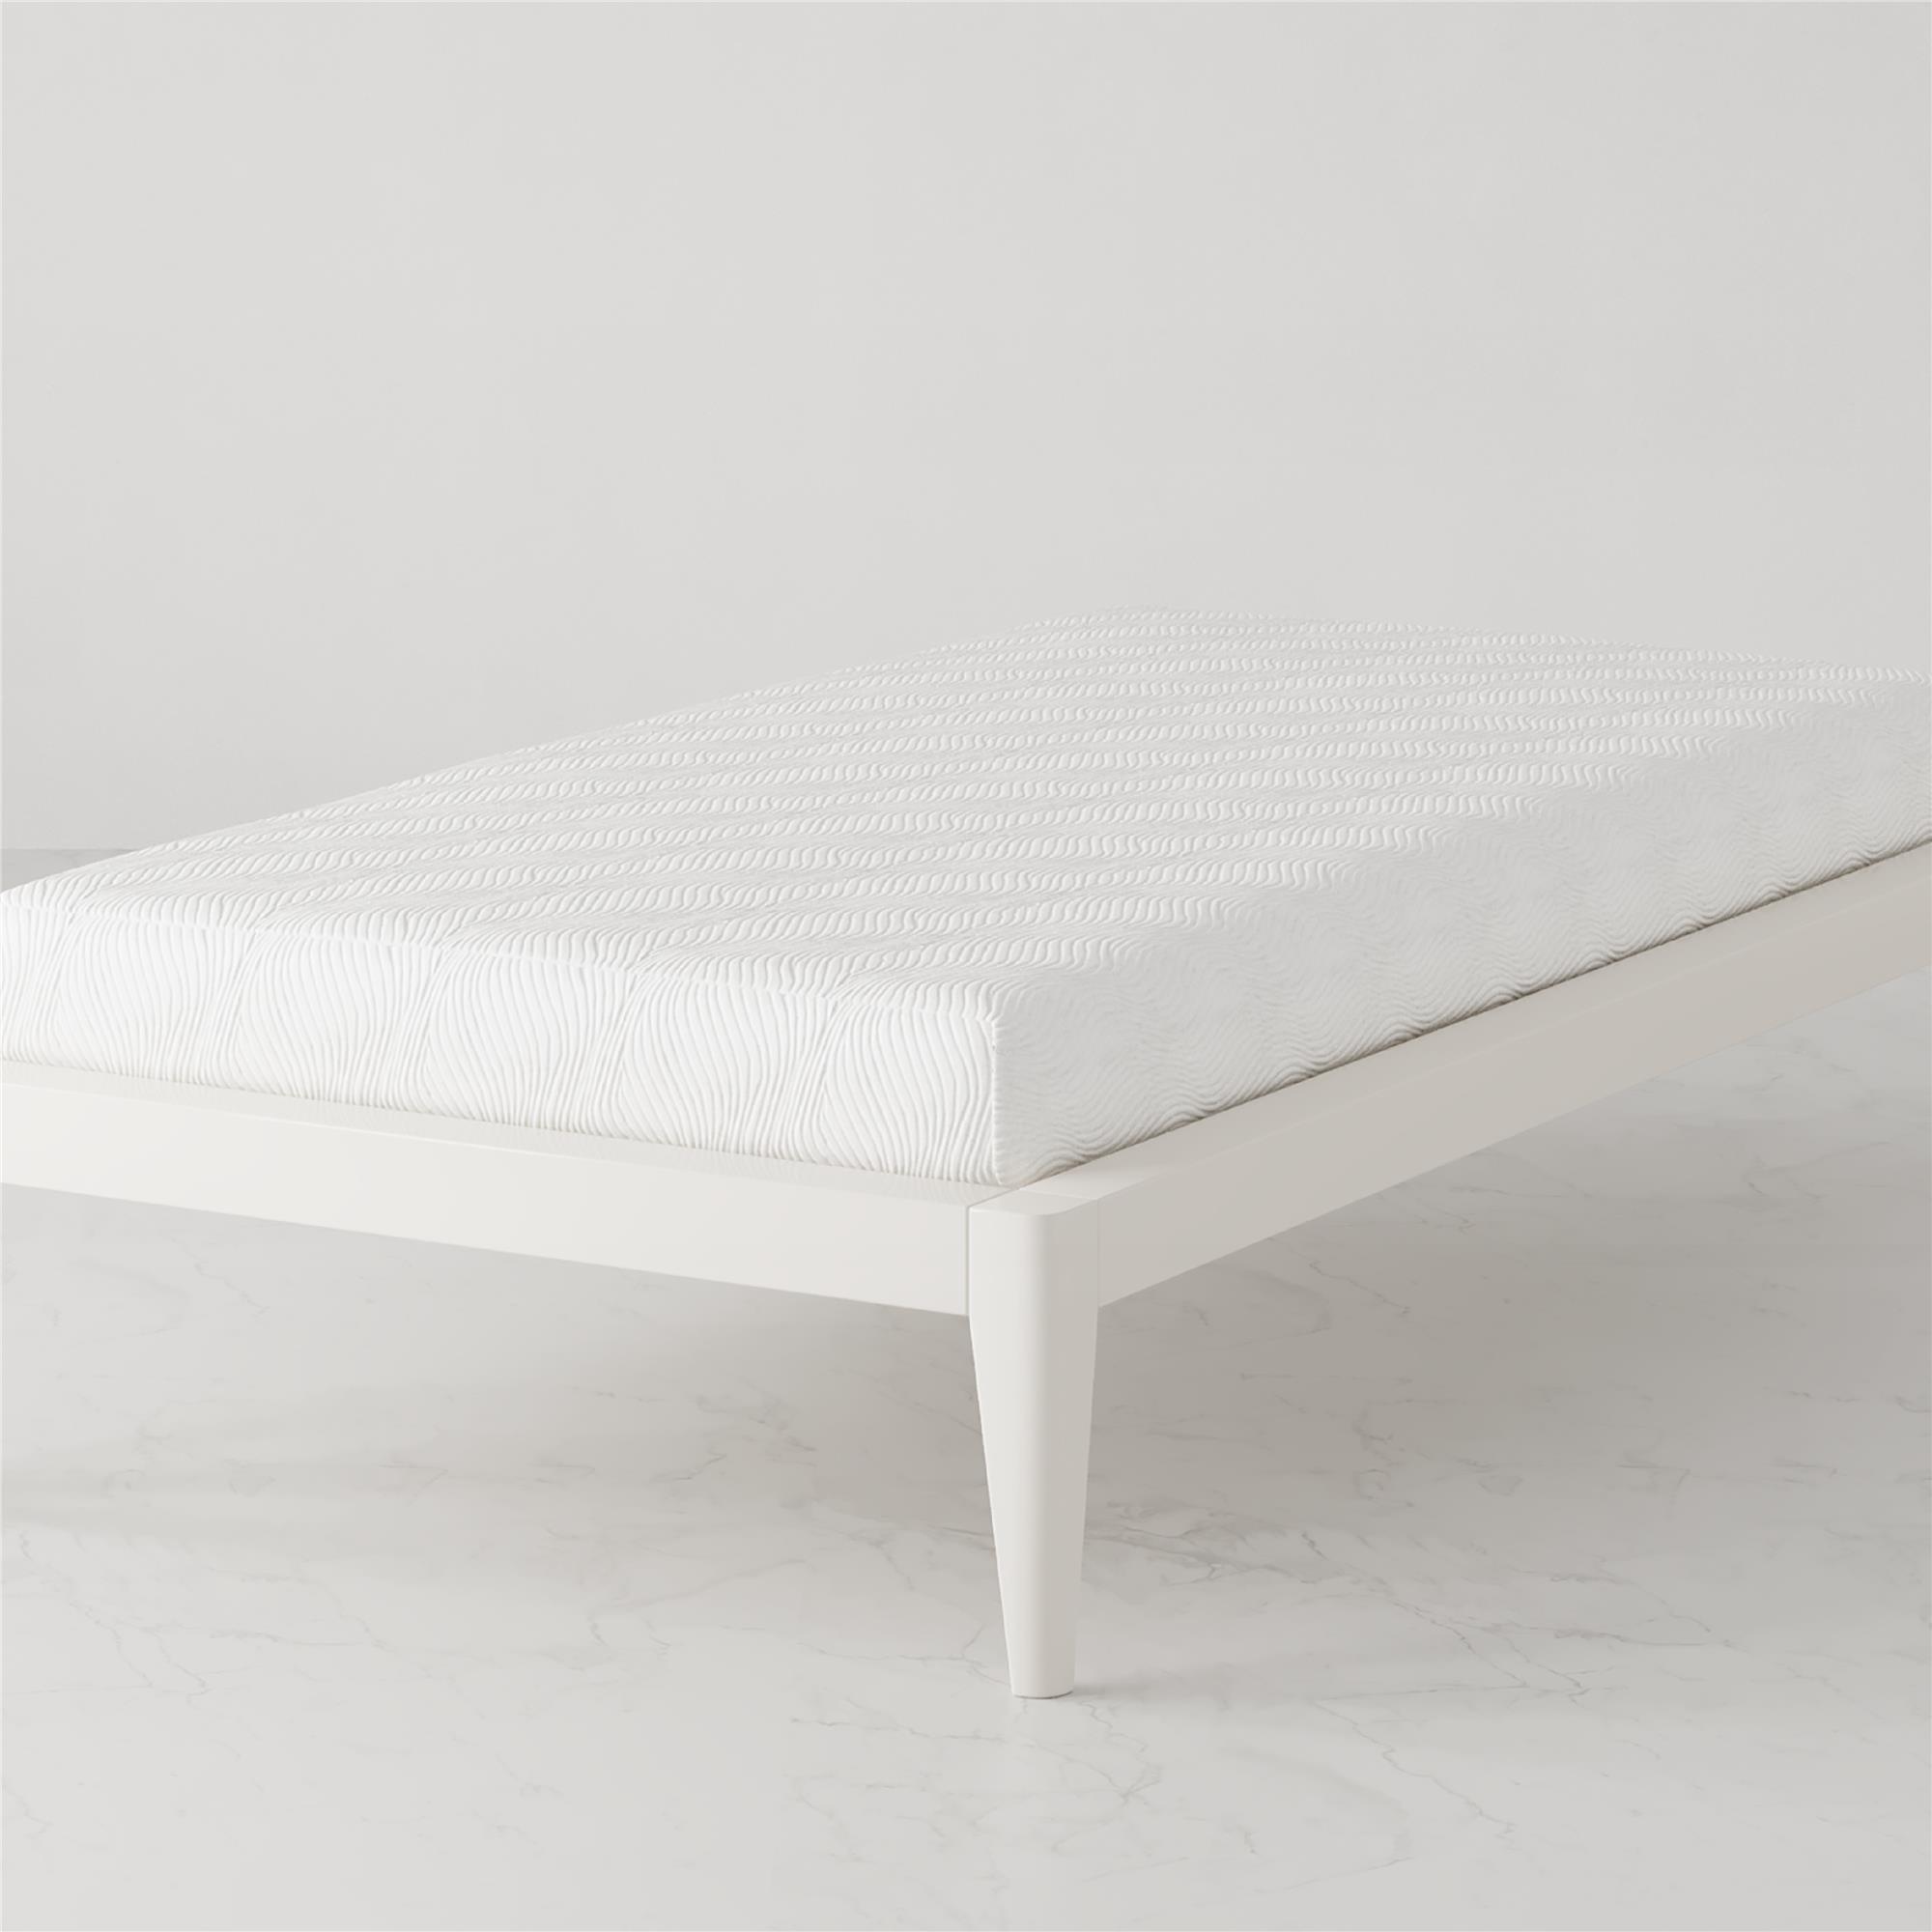 Signature Sleep Memoir 6" High-Density, Responsive Memory Foam Mattress, Bed-in-a-Box, Made in Italy, Twin - image 1 of 14